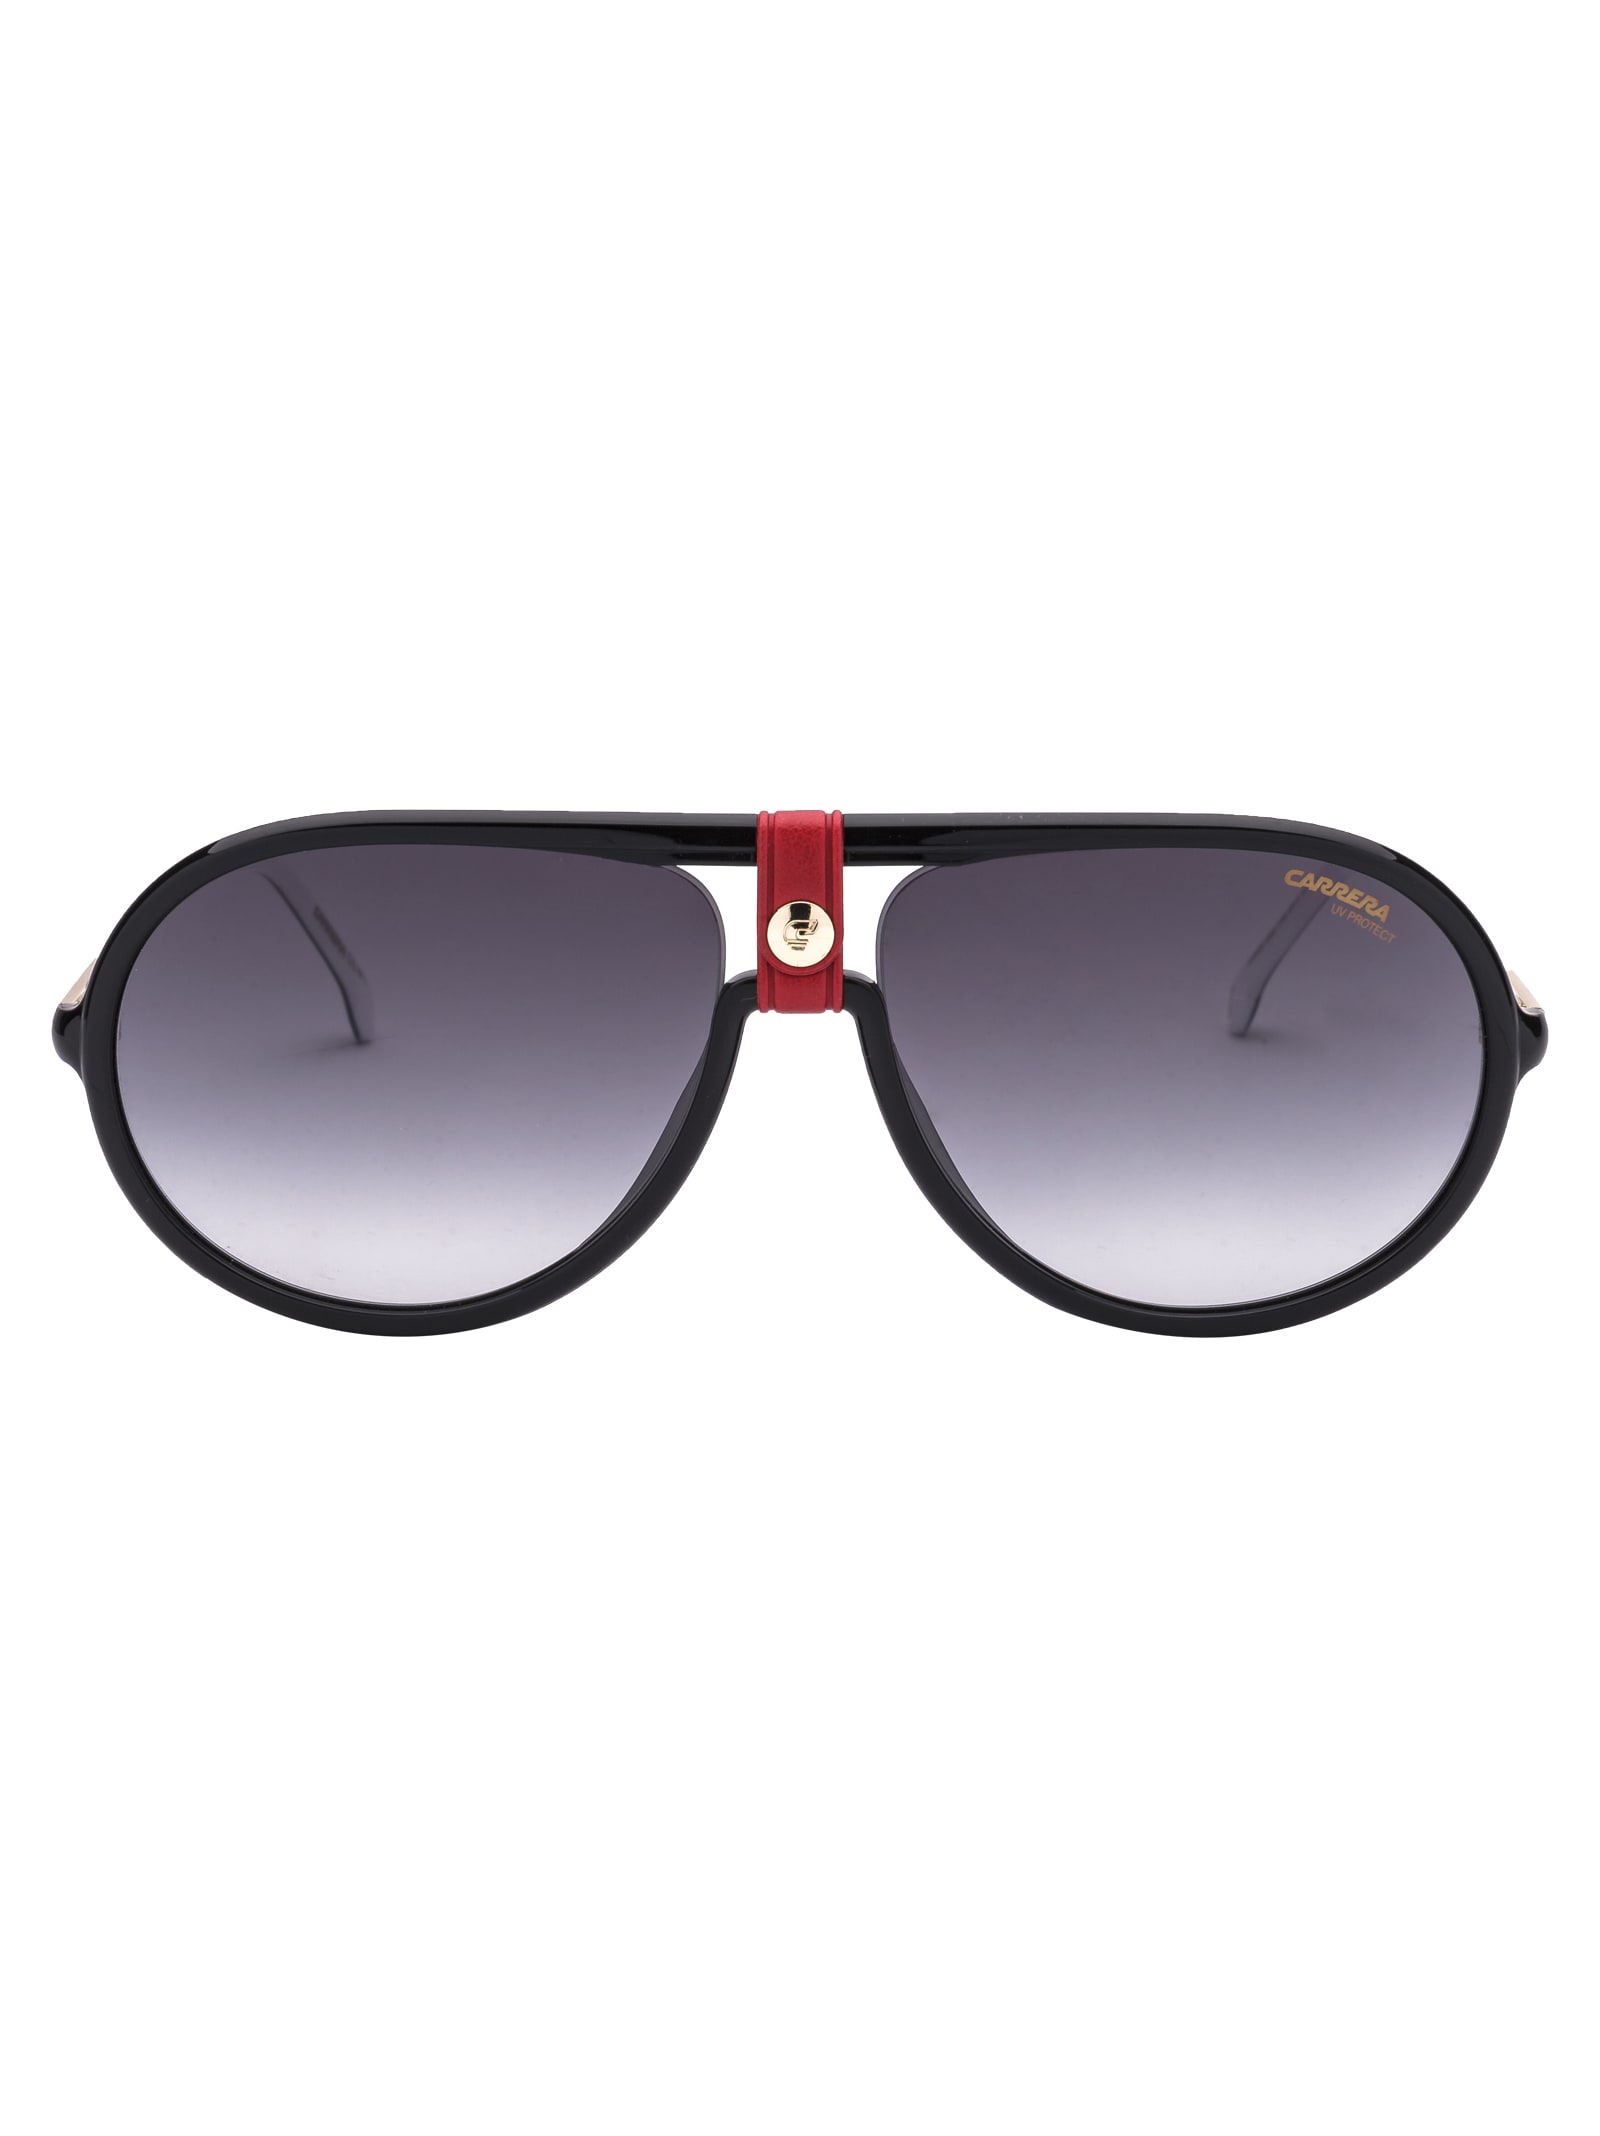 Carrera 1020/s Sunglasses